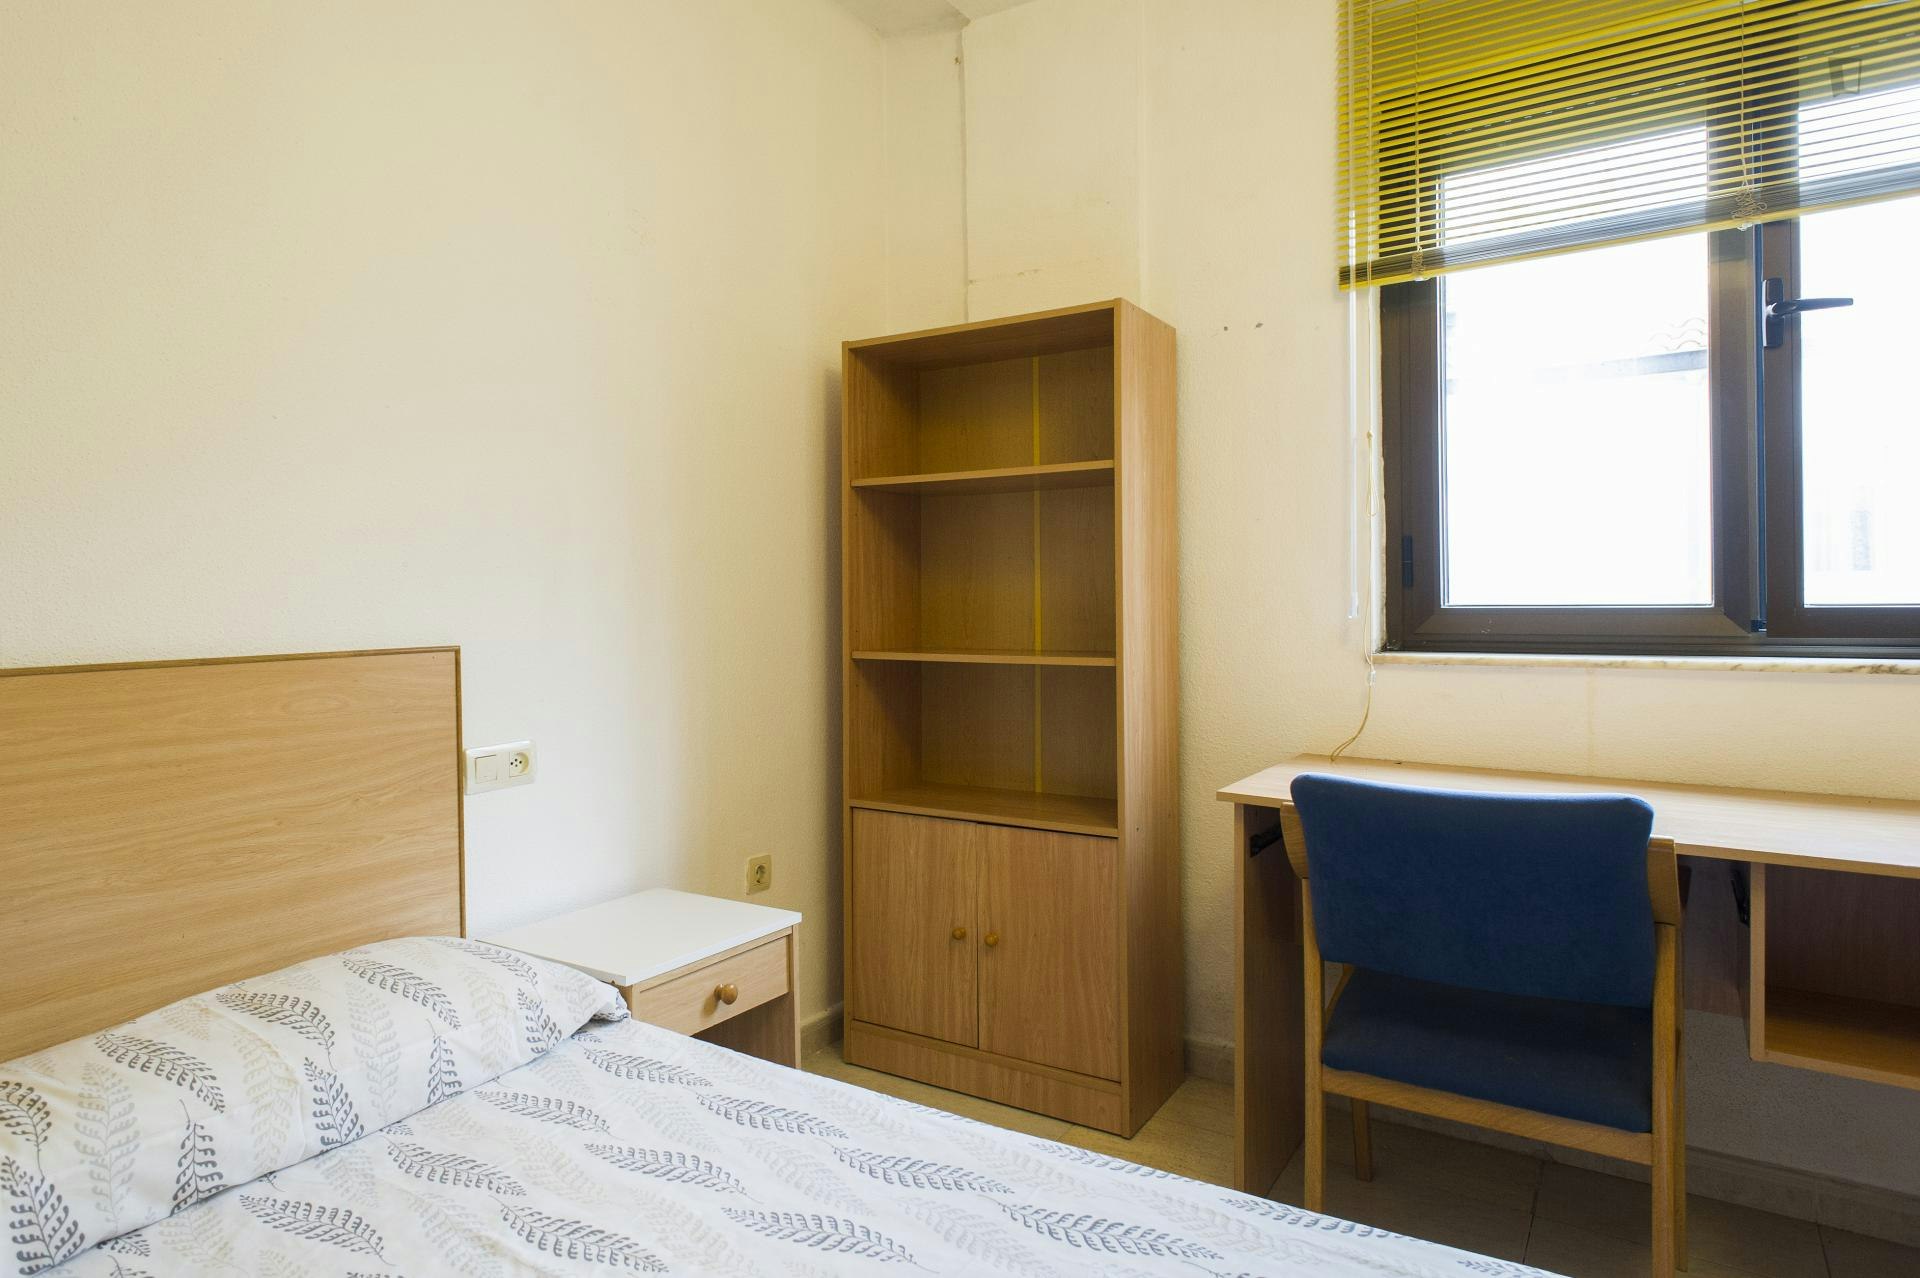 Snug single bedroom in a 6-bedroom flat, near Universidad De Salamanca